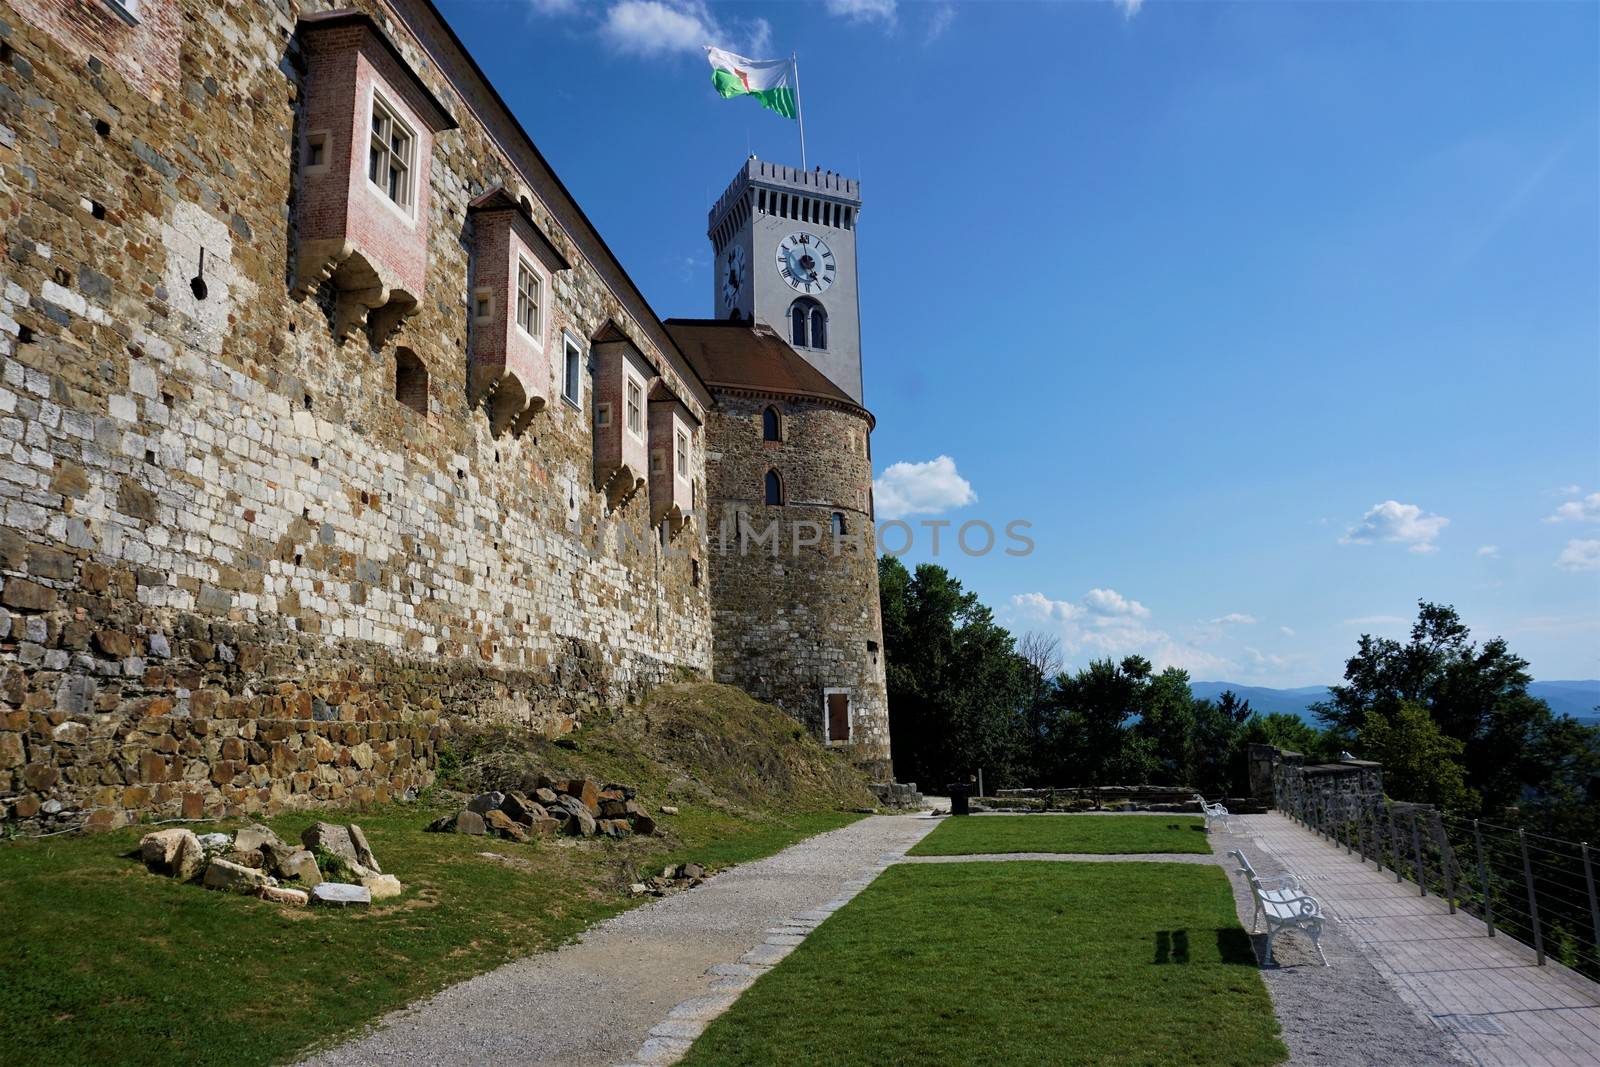 The castle of Ljubljana, Slovenia with park